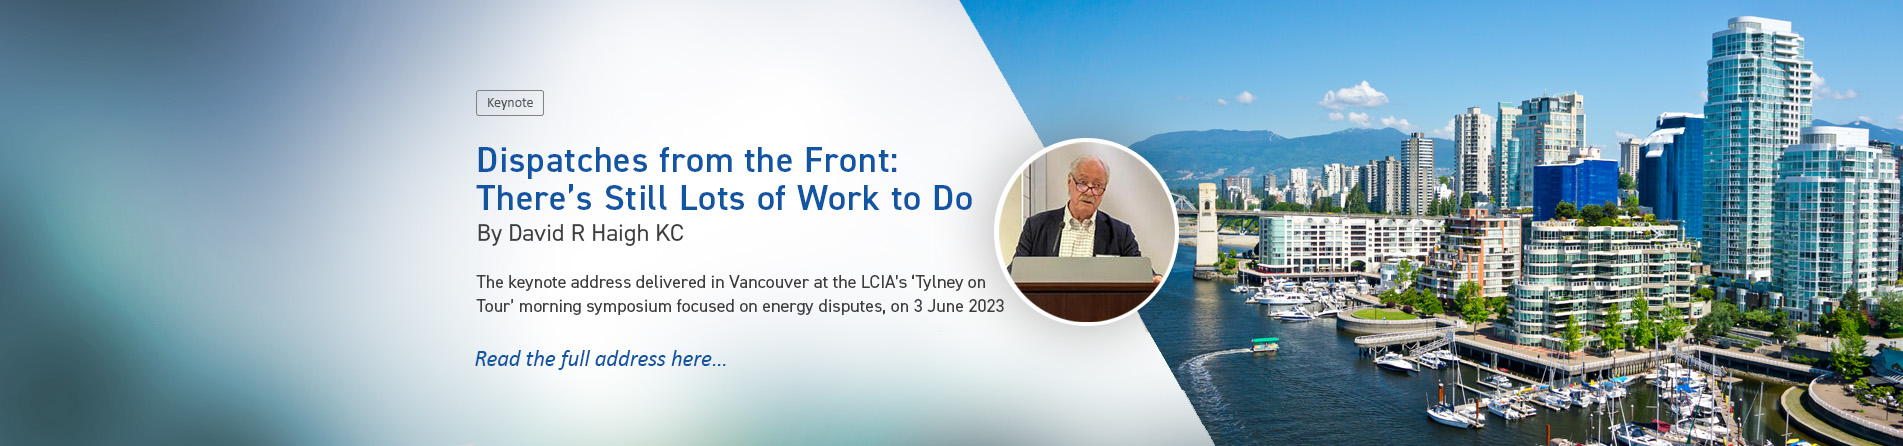 David R Haigh KC Keynote Address - LCIA 'Tylney on Tour' Vancouver